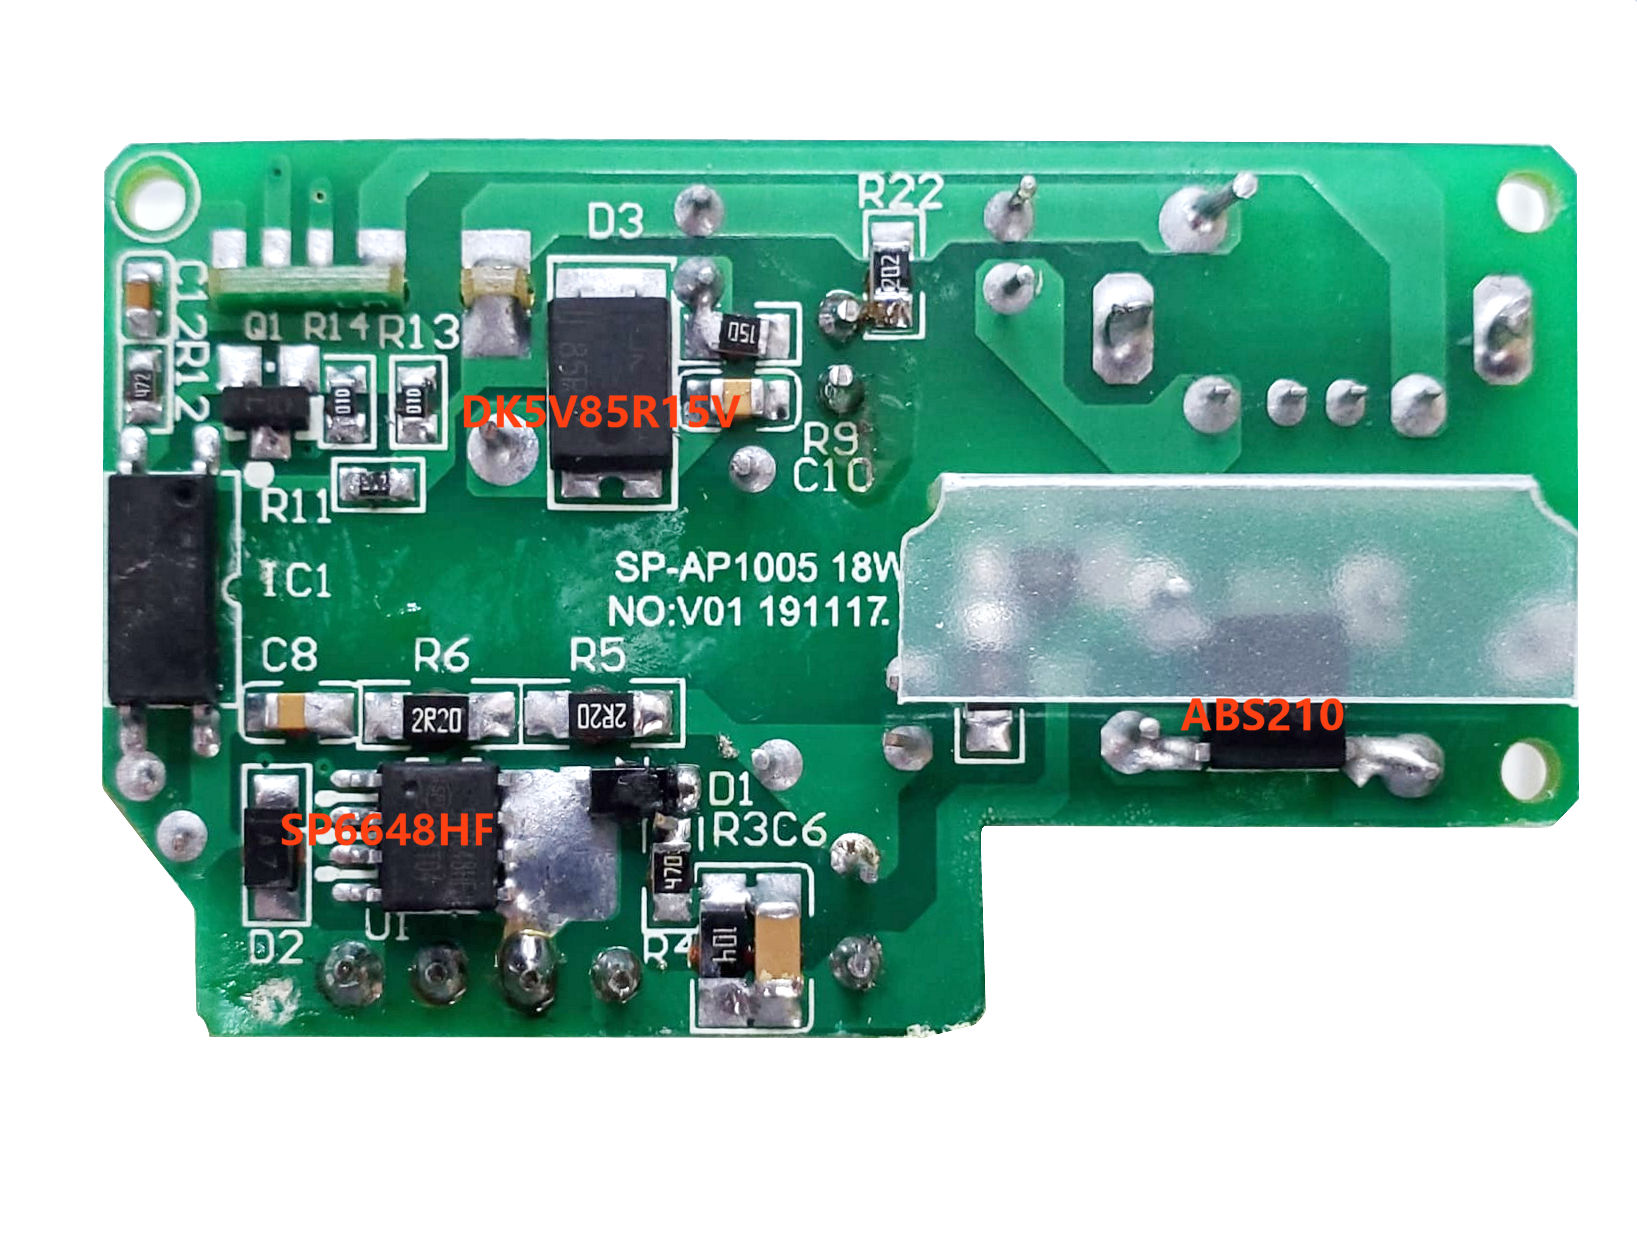 PD 18W 充电，5.7A 总输出M2K PDQC USB-C + 13A 入墙式插座-HKEPC Hardware